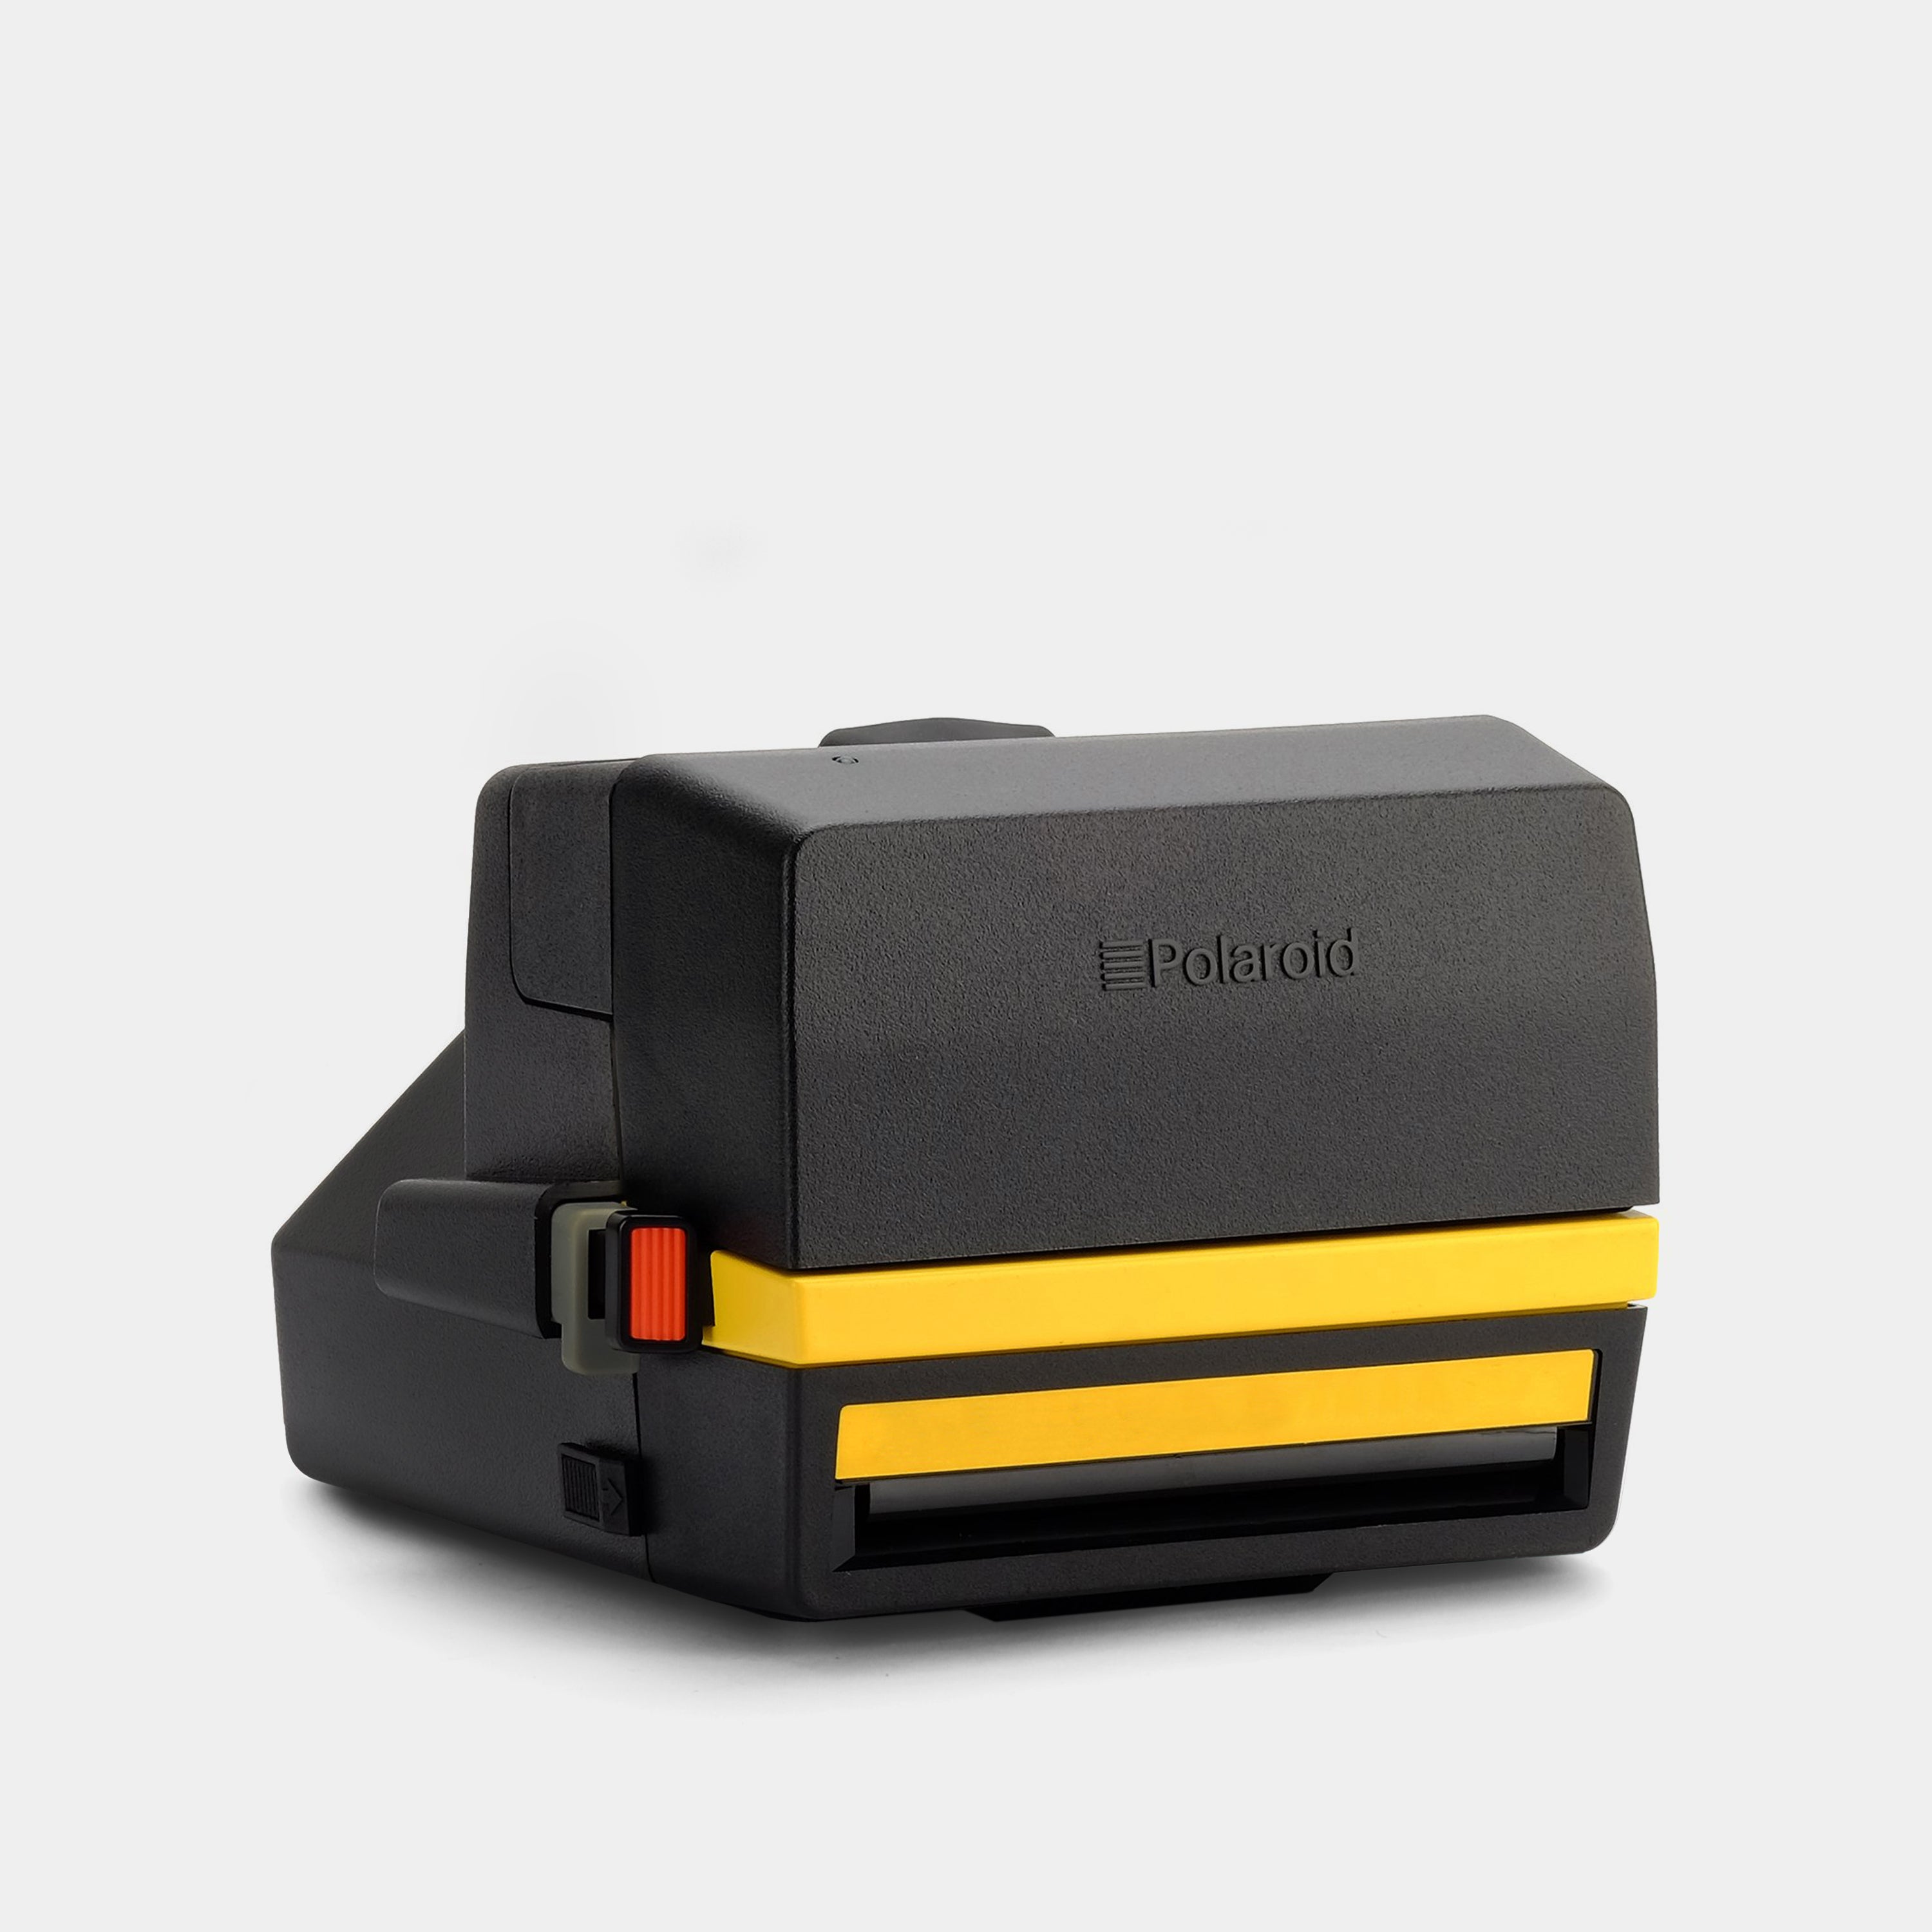 Polaroid 600 Job Pro Instant Film Camera